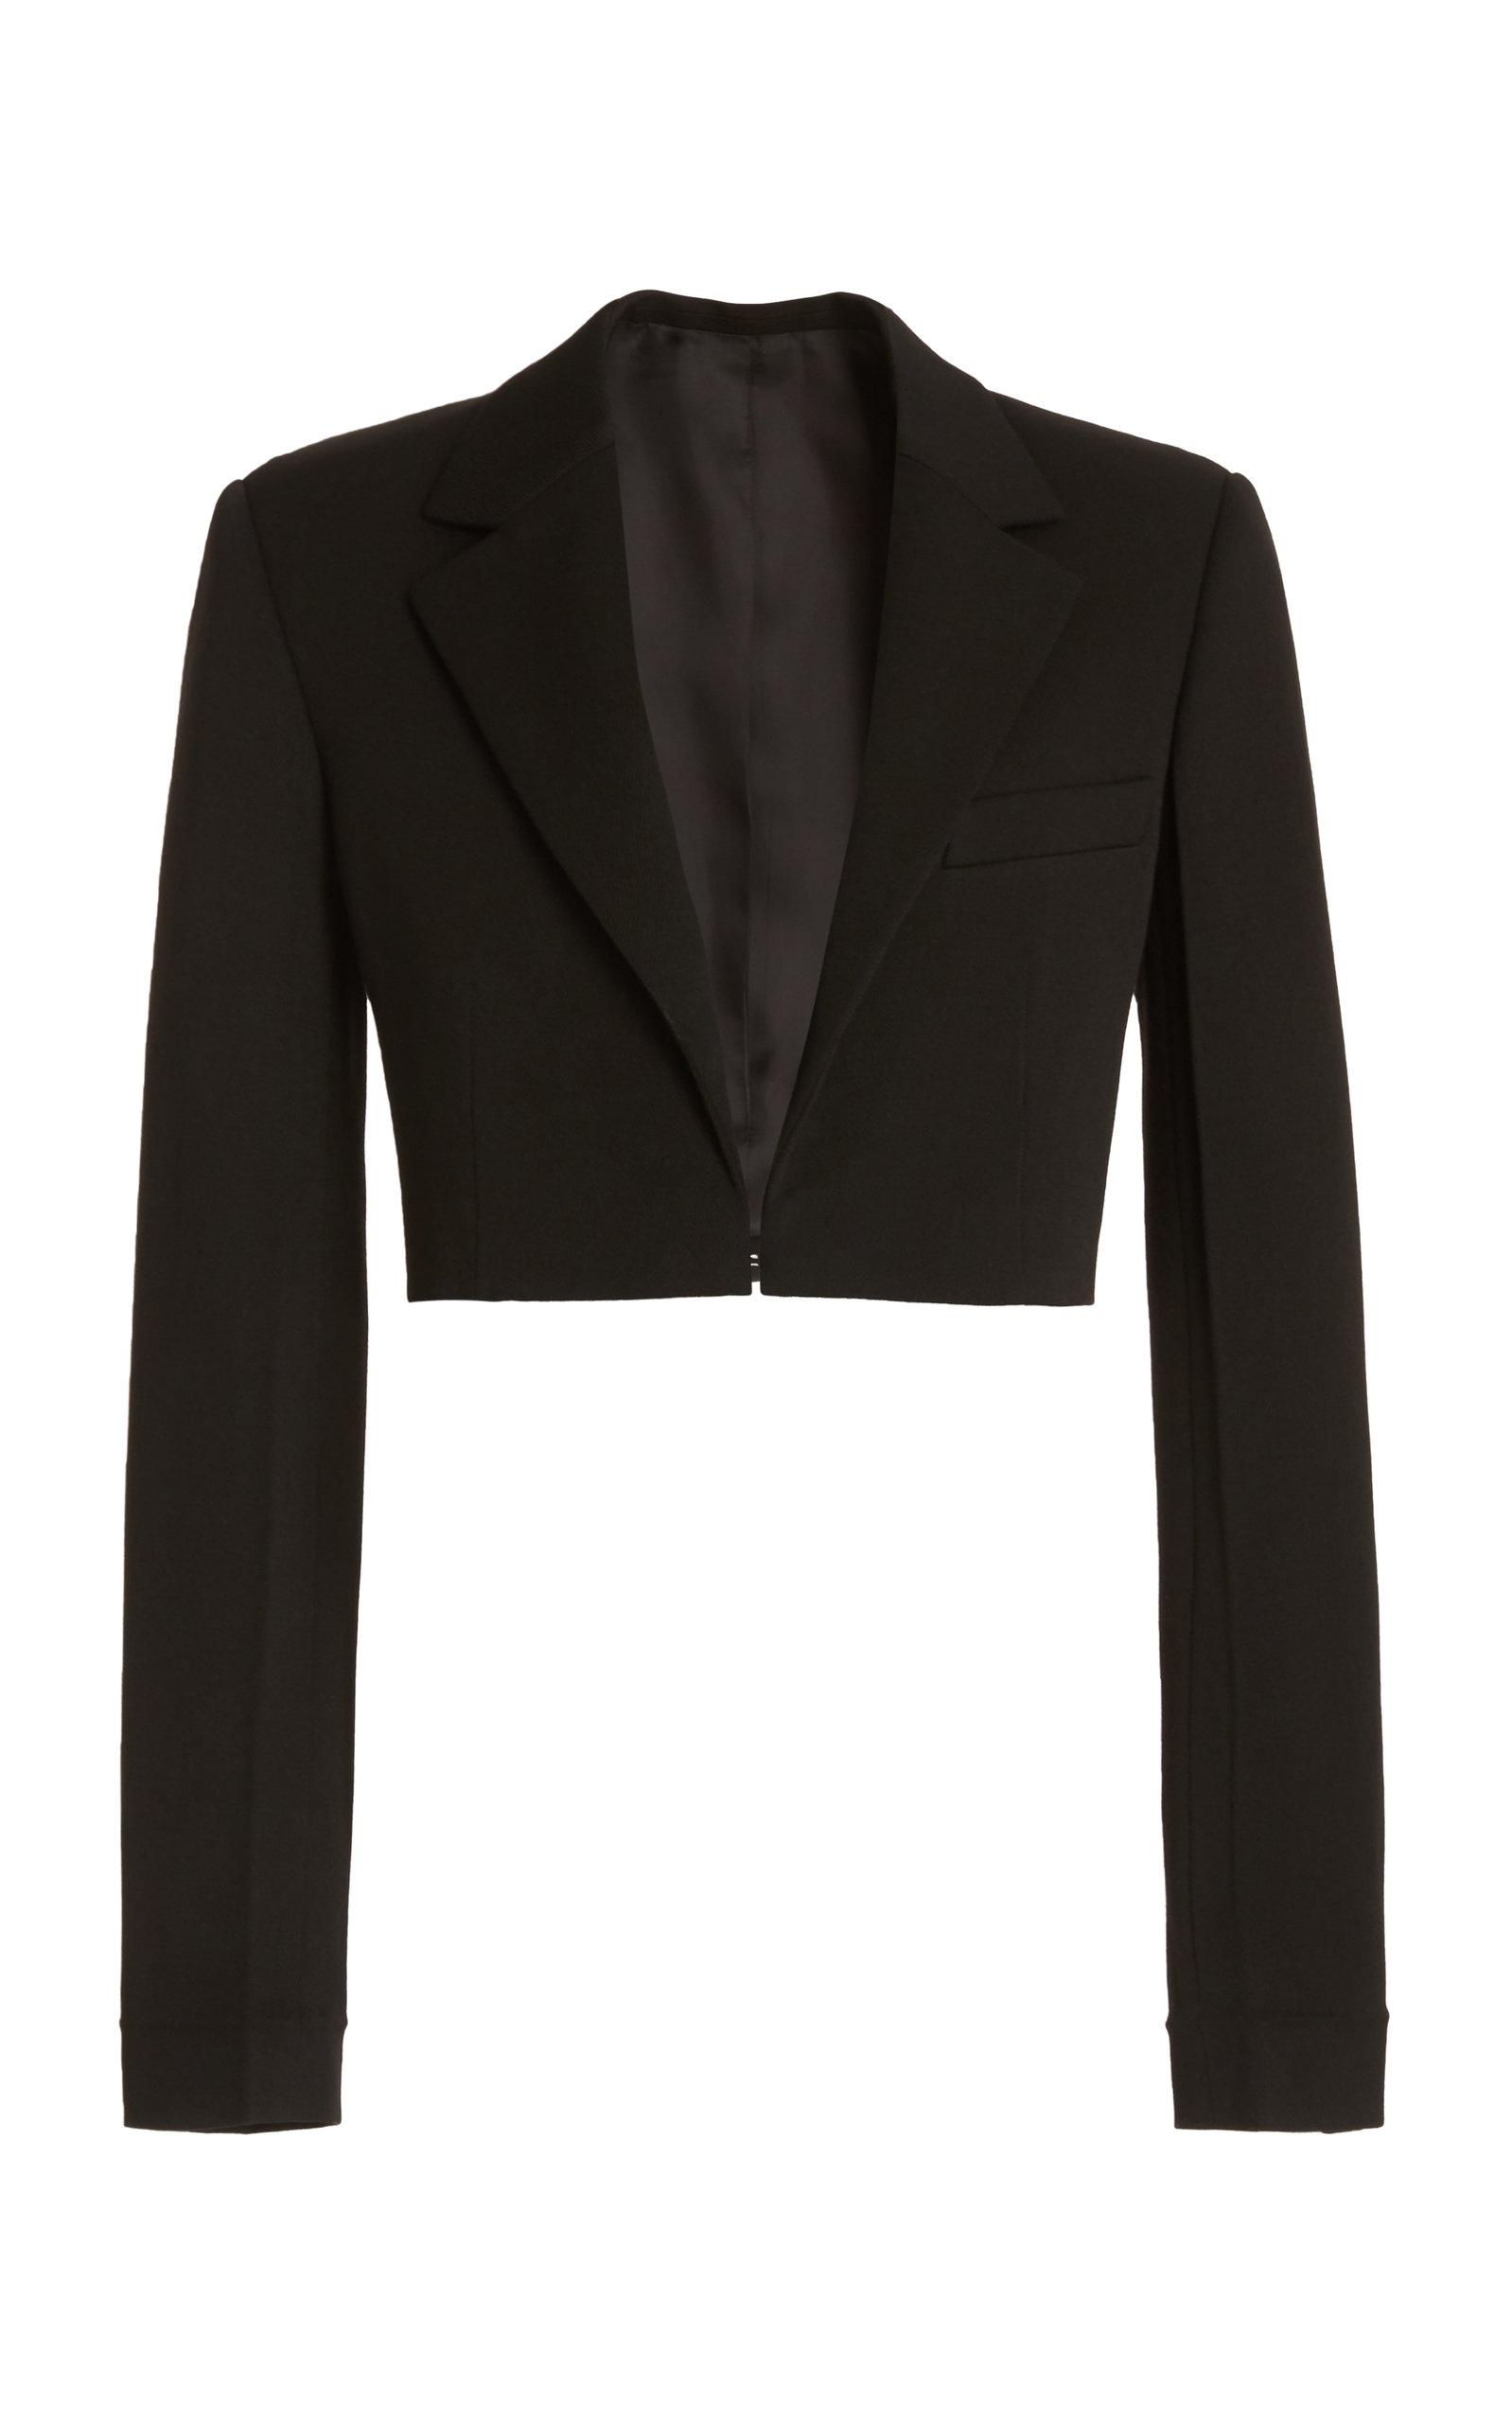 Victoria Beckham - Women's Cropped Wool Gabardine Jacket - Black - UK 6 - Moda Operandi